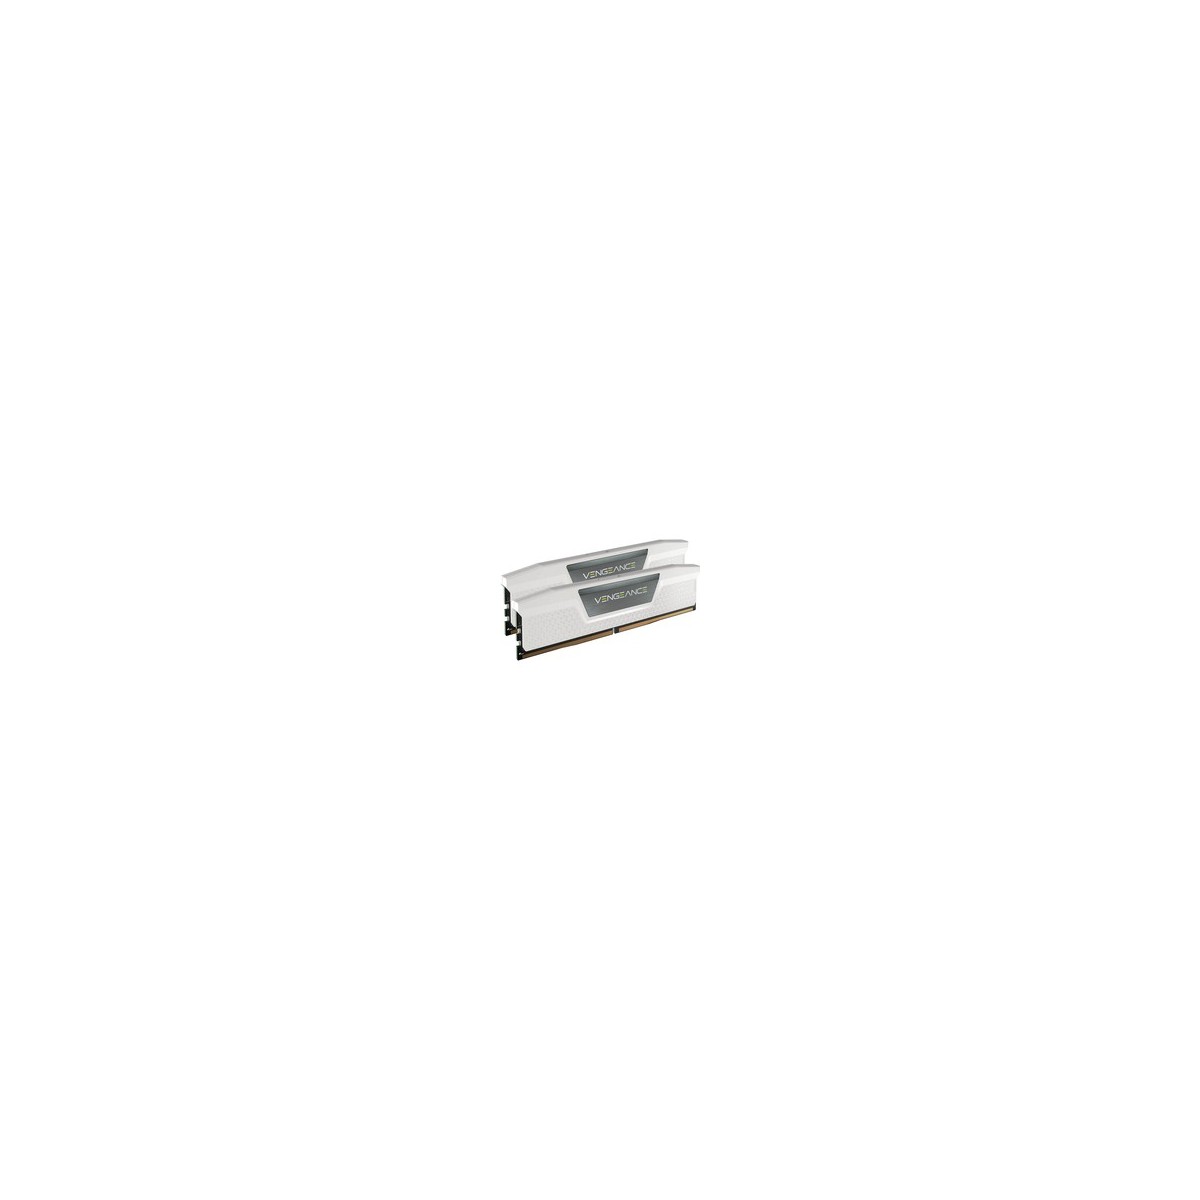 Corsair DDR5 32GB PC 6000 CL36 Kit 2x16GB Vengeance White retail - 32 GB - 32 GB - DDR5